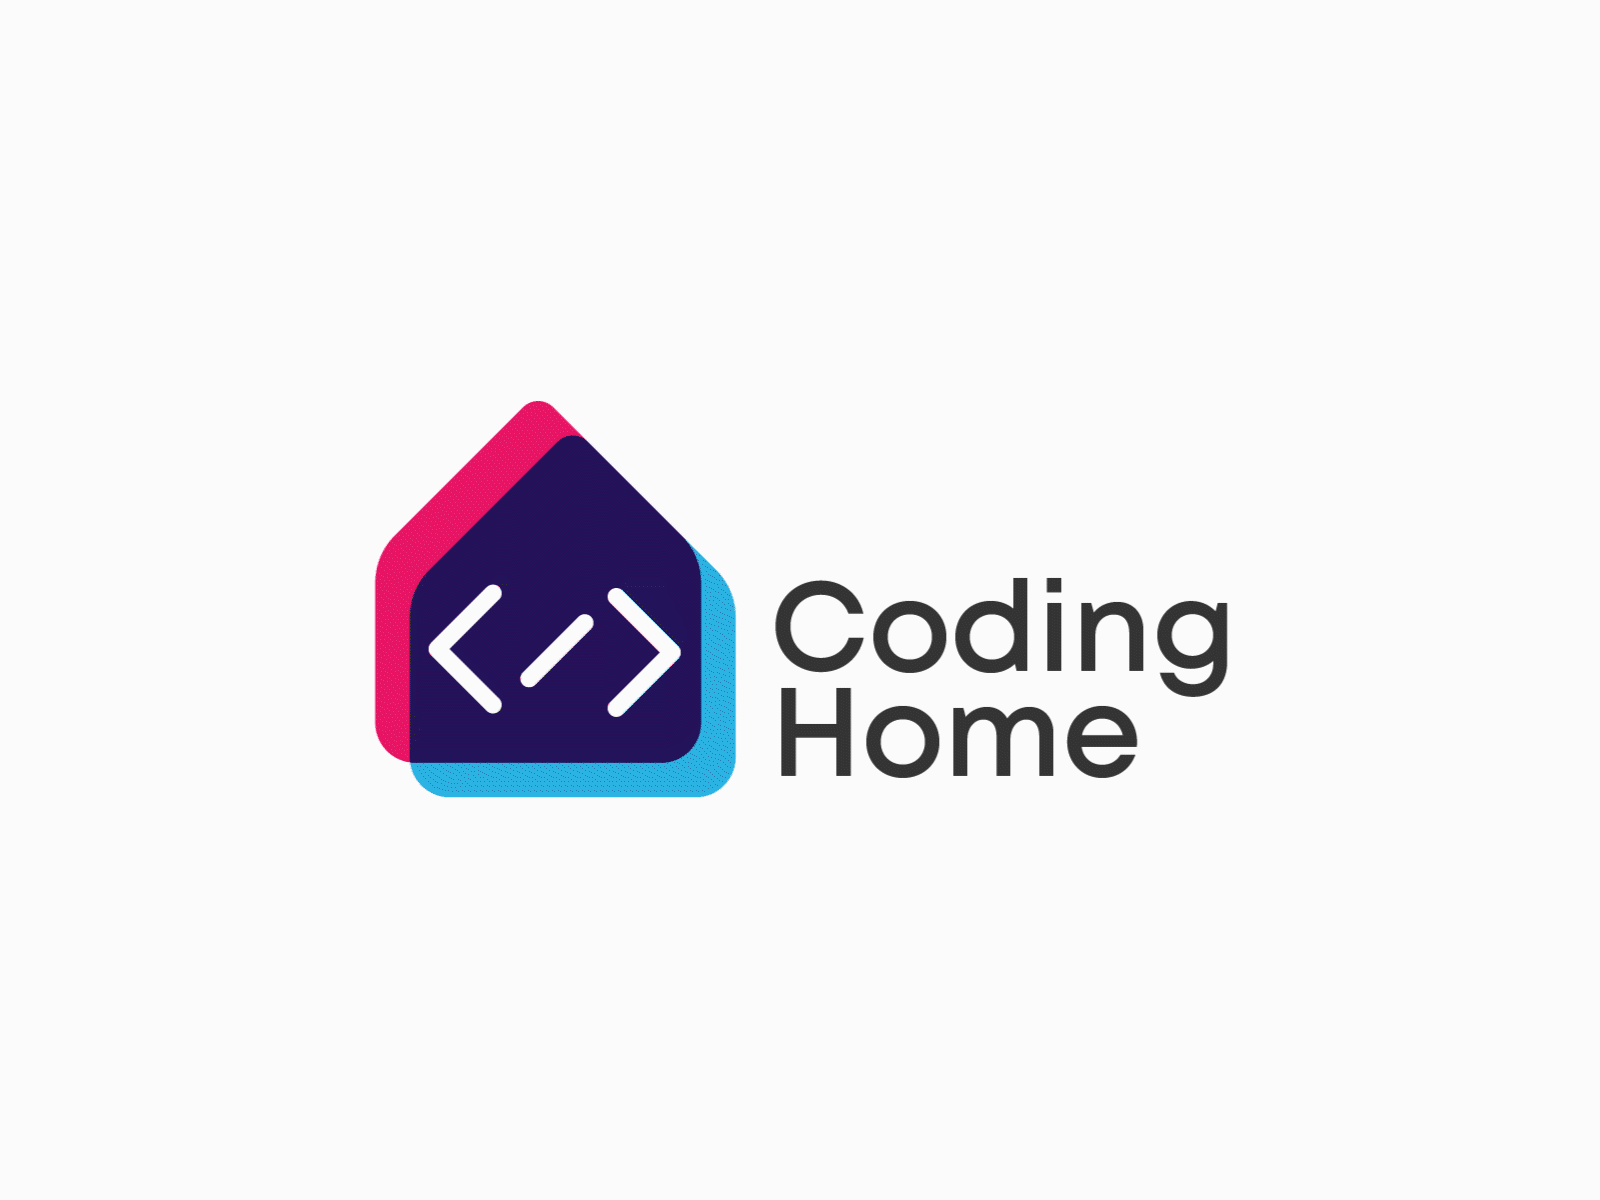 Coding Home